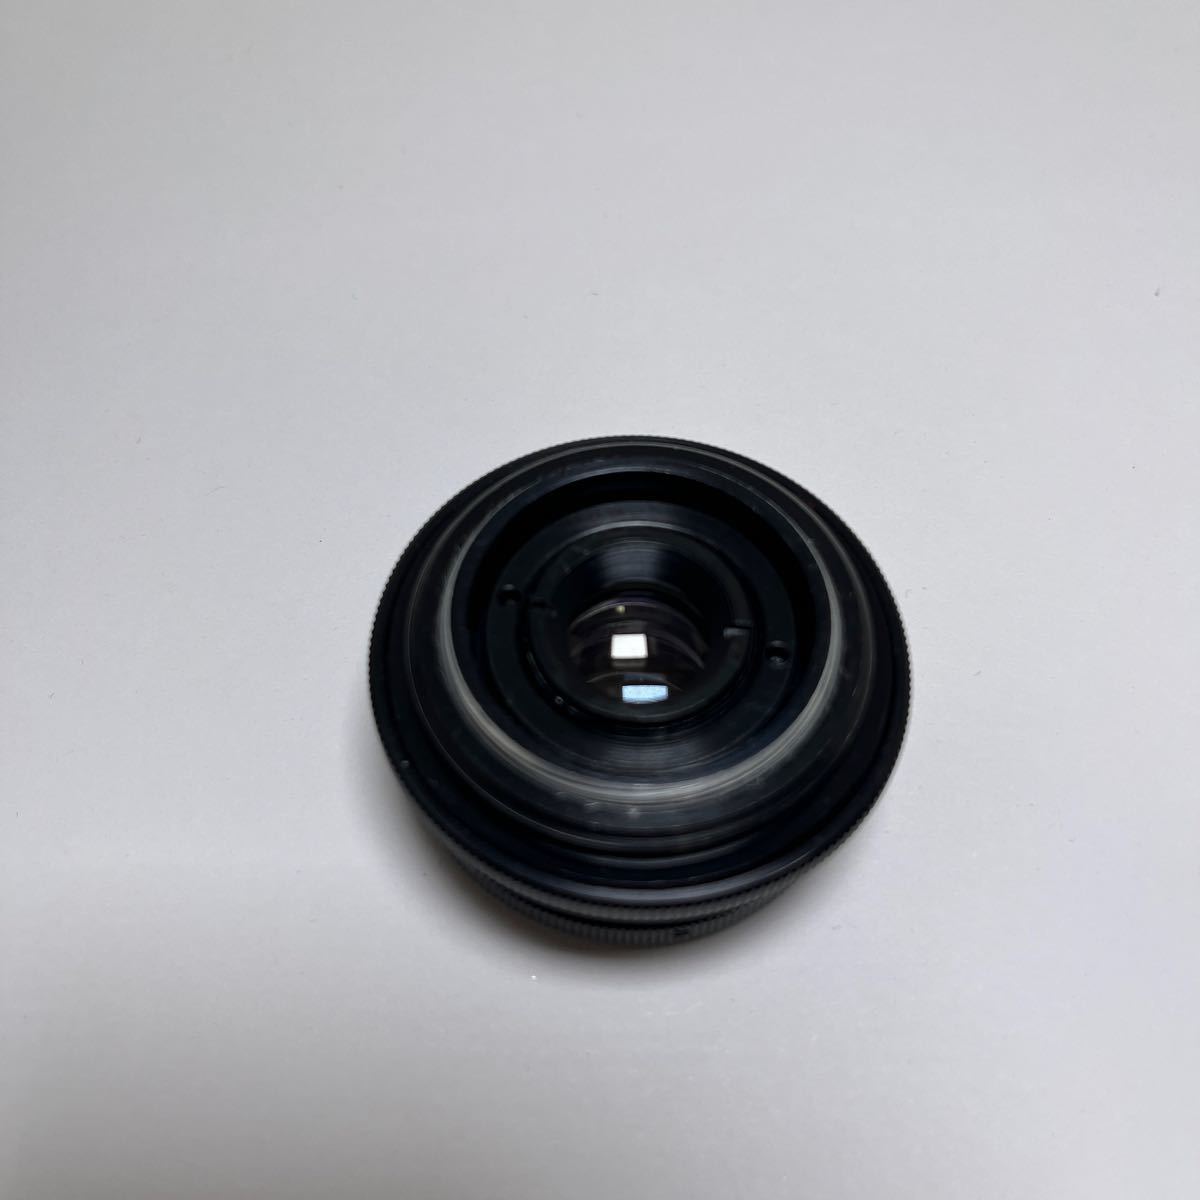 Industar 50-2 50 / 3.5 50mm黒ロシア ソ連レンズSLR DSLRカメラ オールドレンズ カメラレンズ   ★送料無料★防湿庫管理の画像2